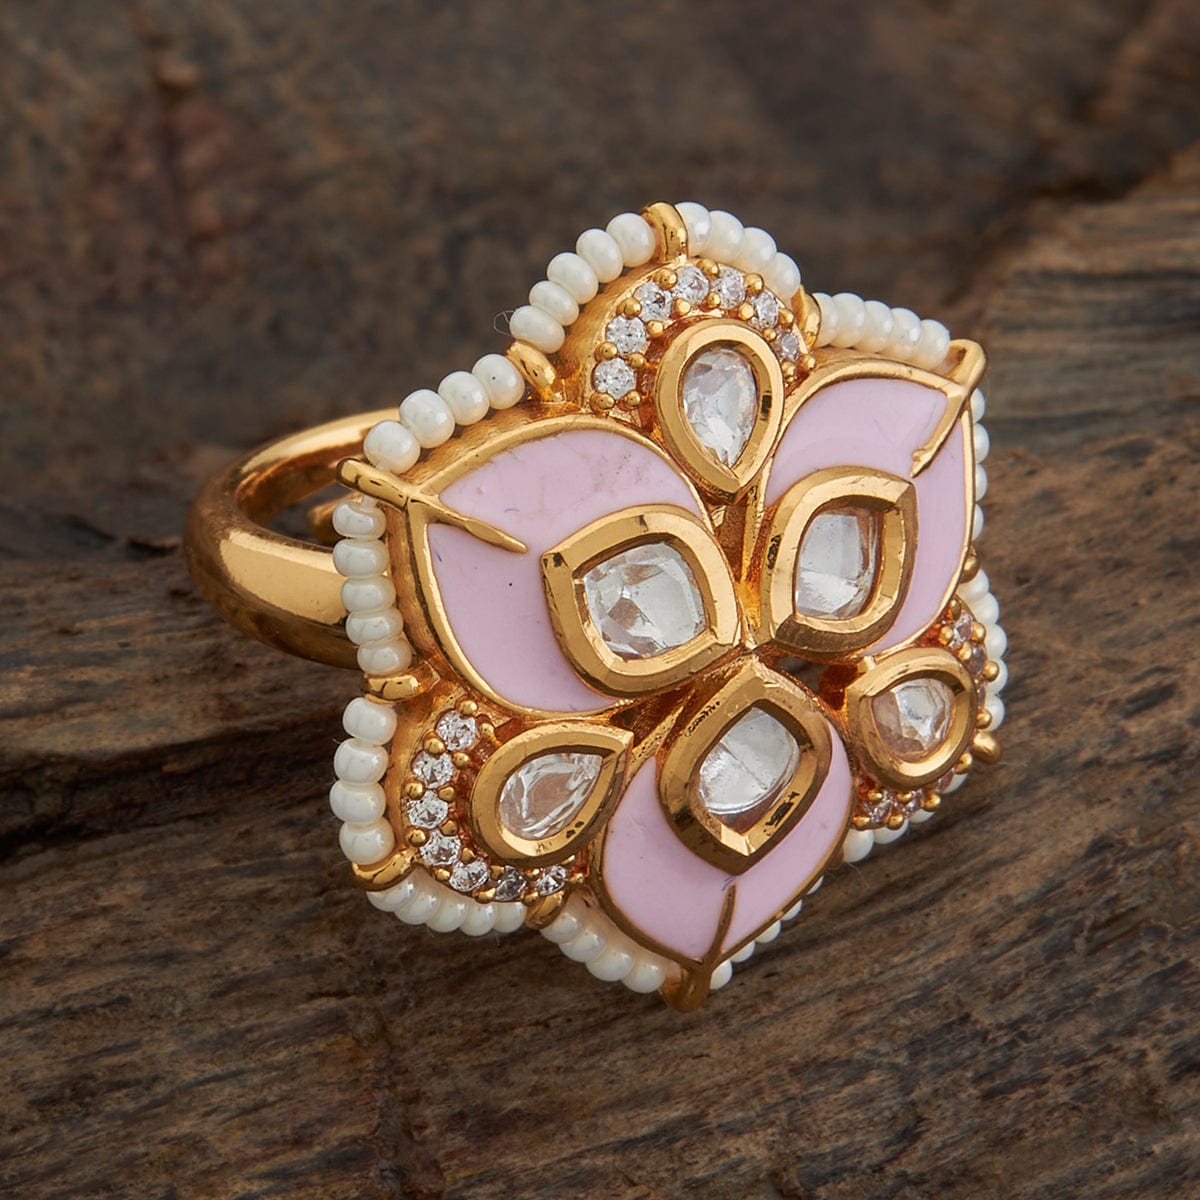 Golden Ladies Gold Kundan Ring at Rs 48000 in Jaipur | ID: 23521235212